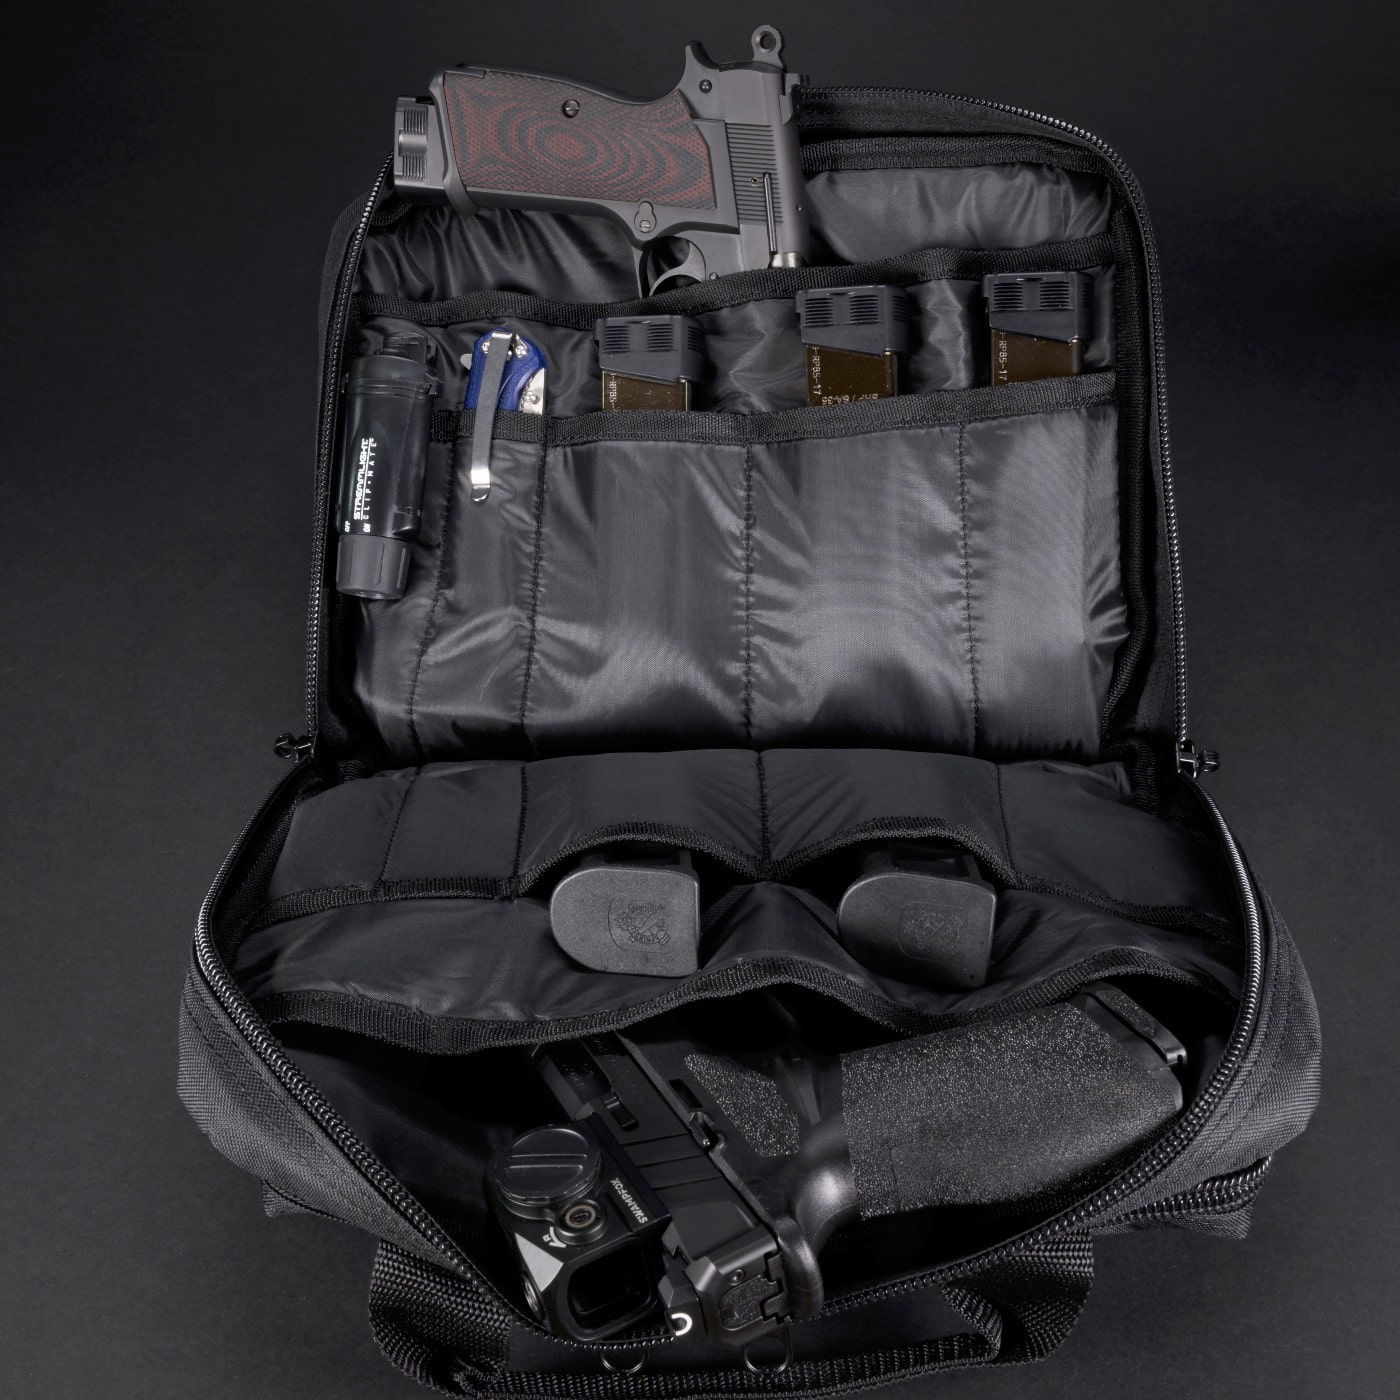 springfield dual handgun bag reviews